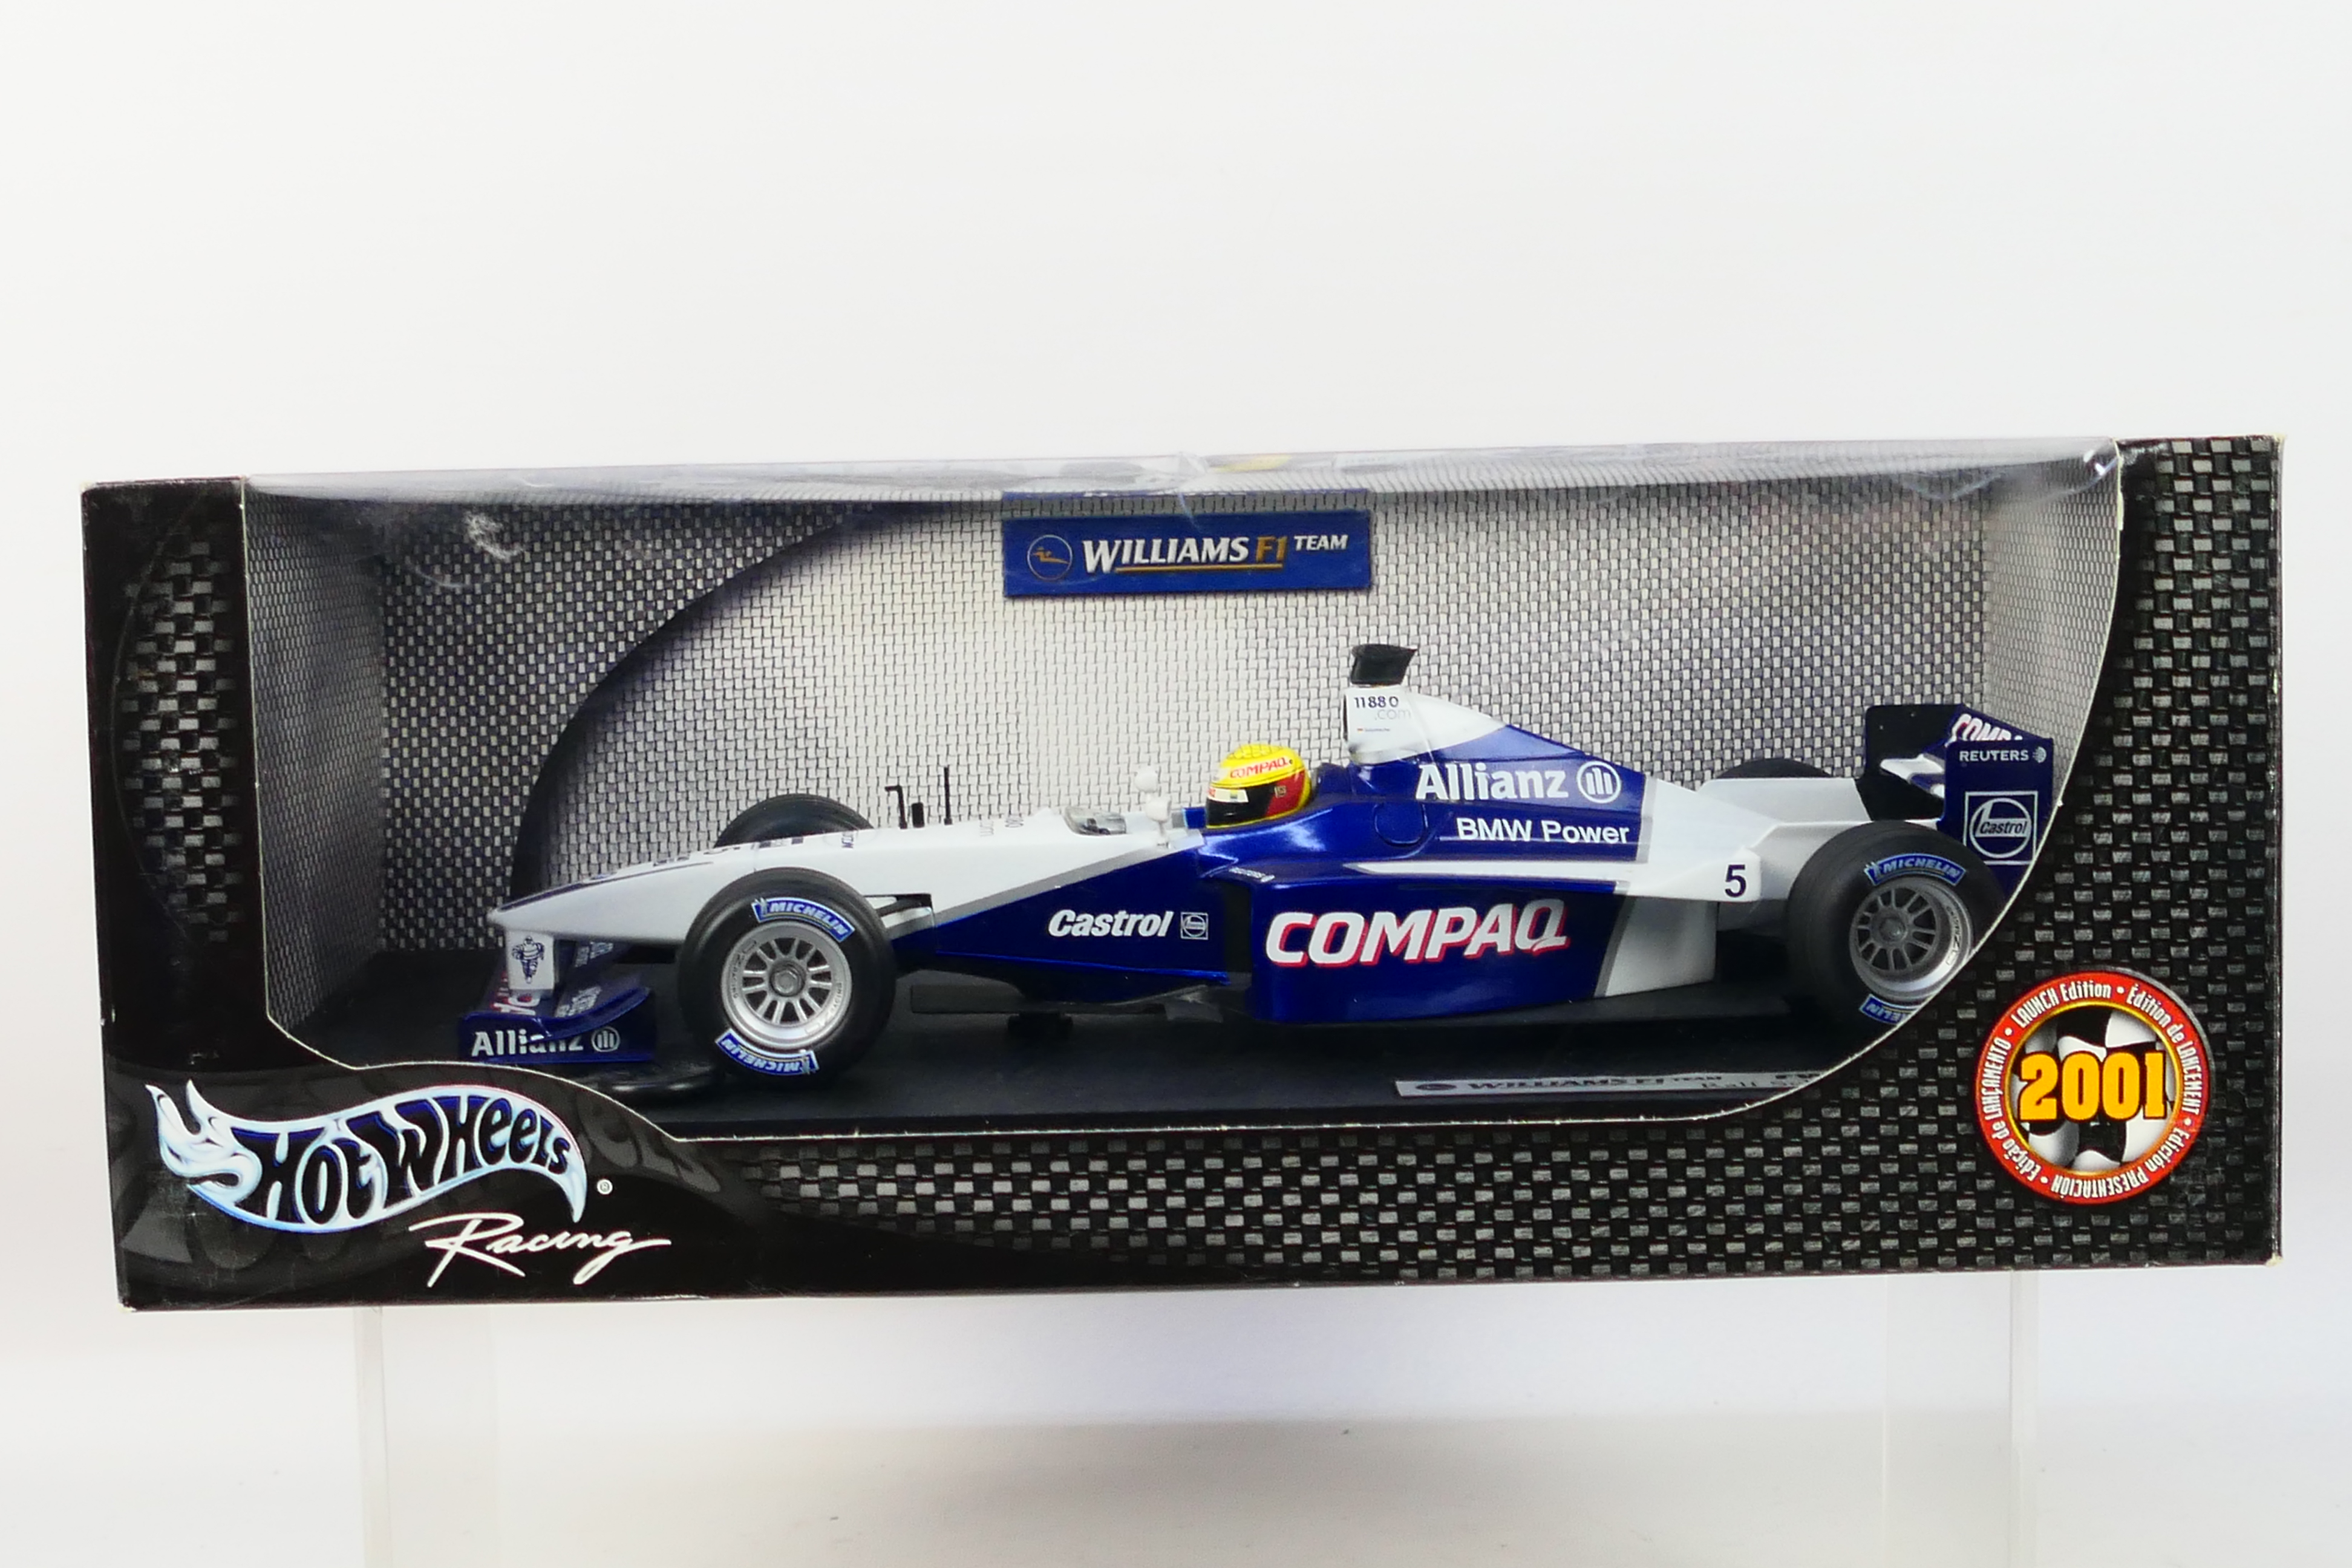 Hot Wheels - A boxed 1:18 scale Williams FW23 Ralf Schumacher 2001 F1 car # 50168.